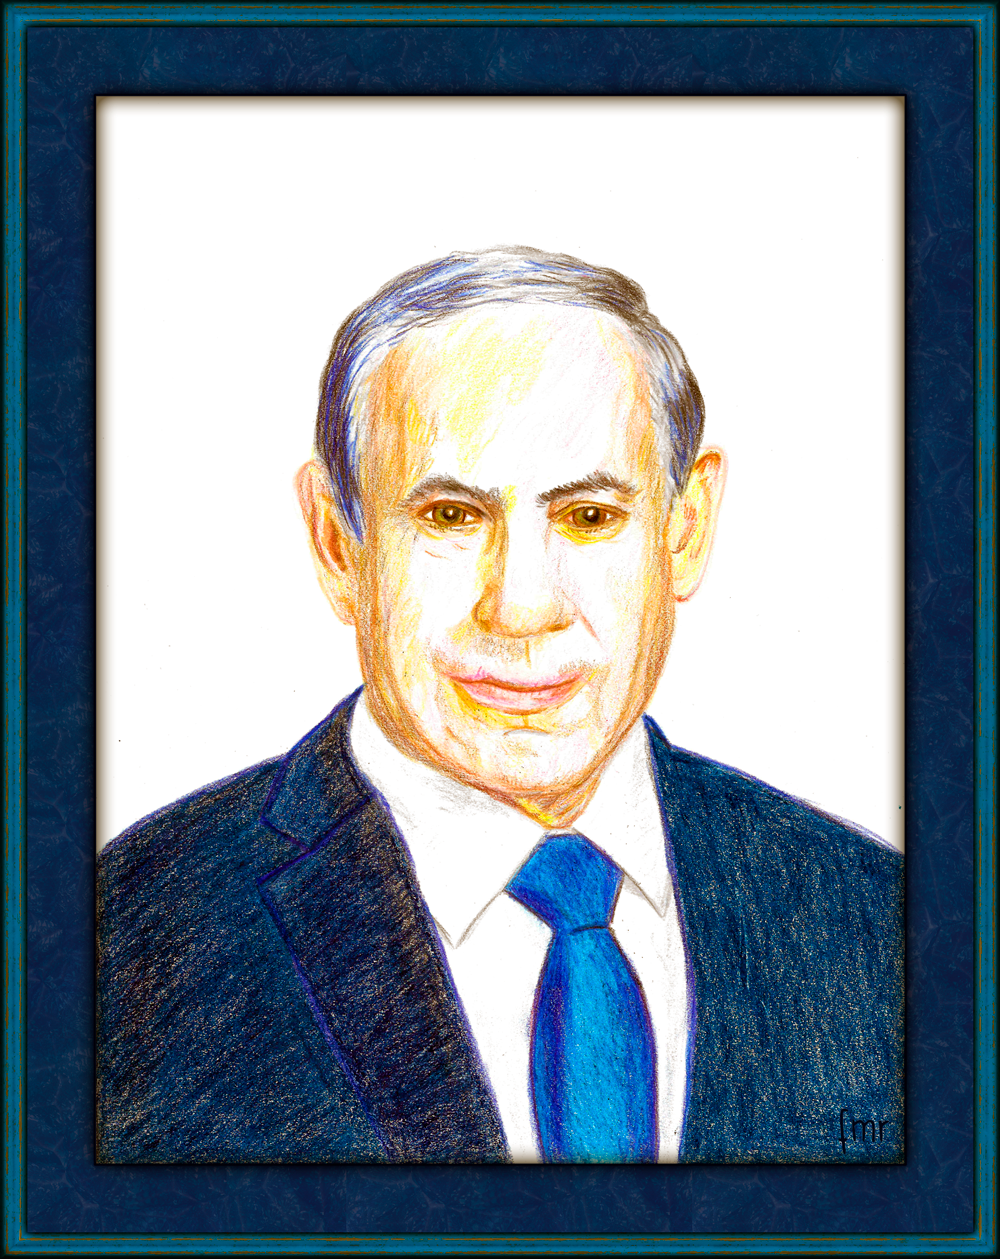 Benjamin Netanyahu by Saltwater